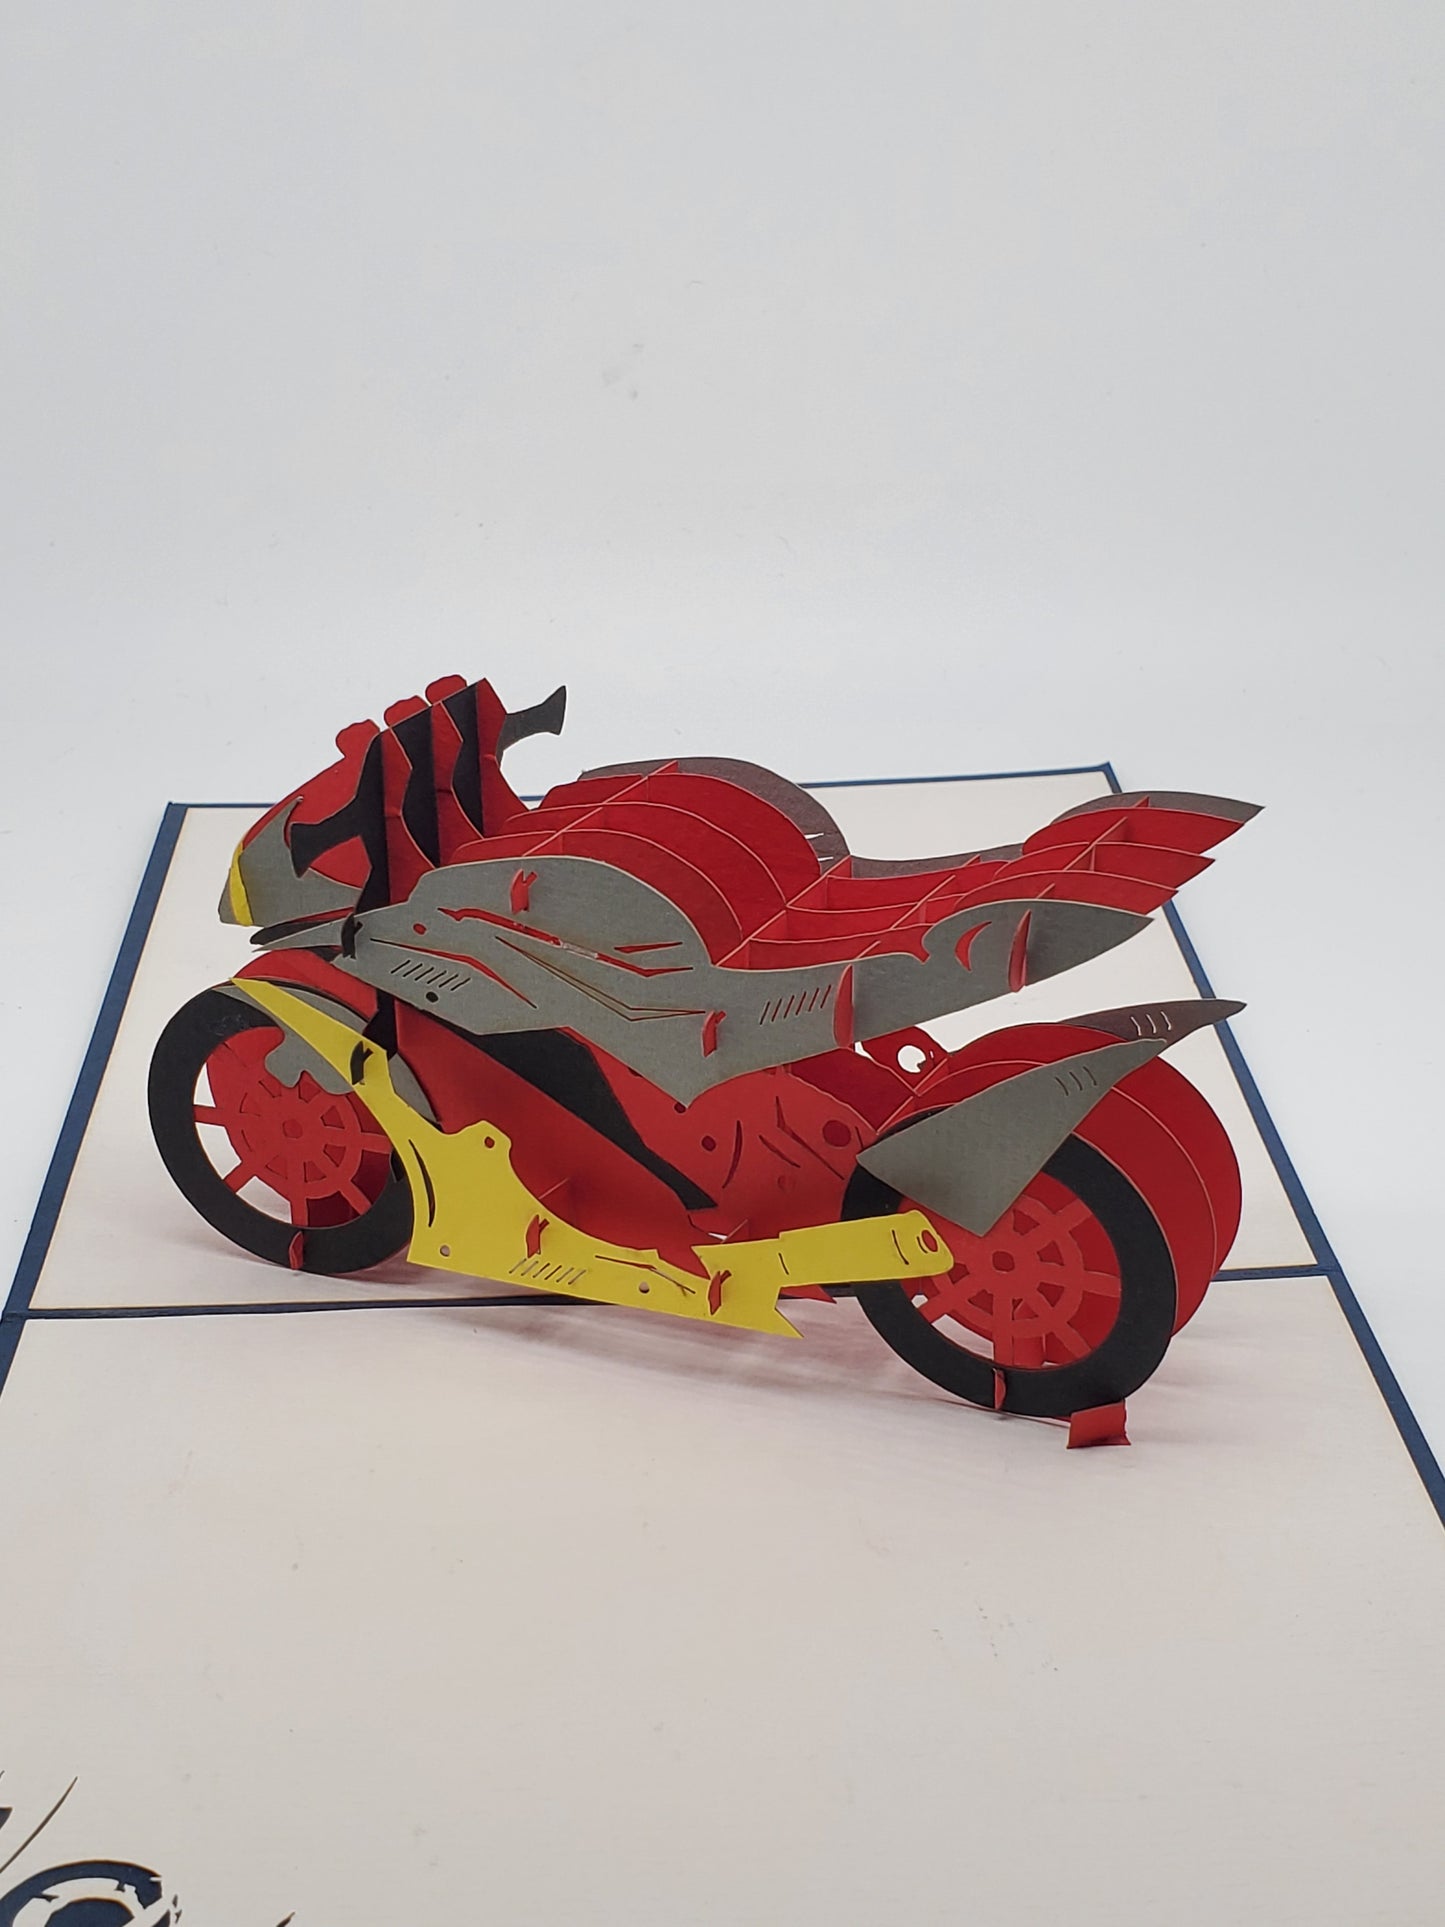 Racing Motorcycle 3D Pop Up Card